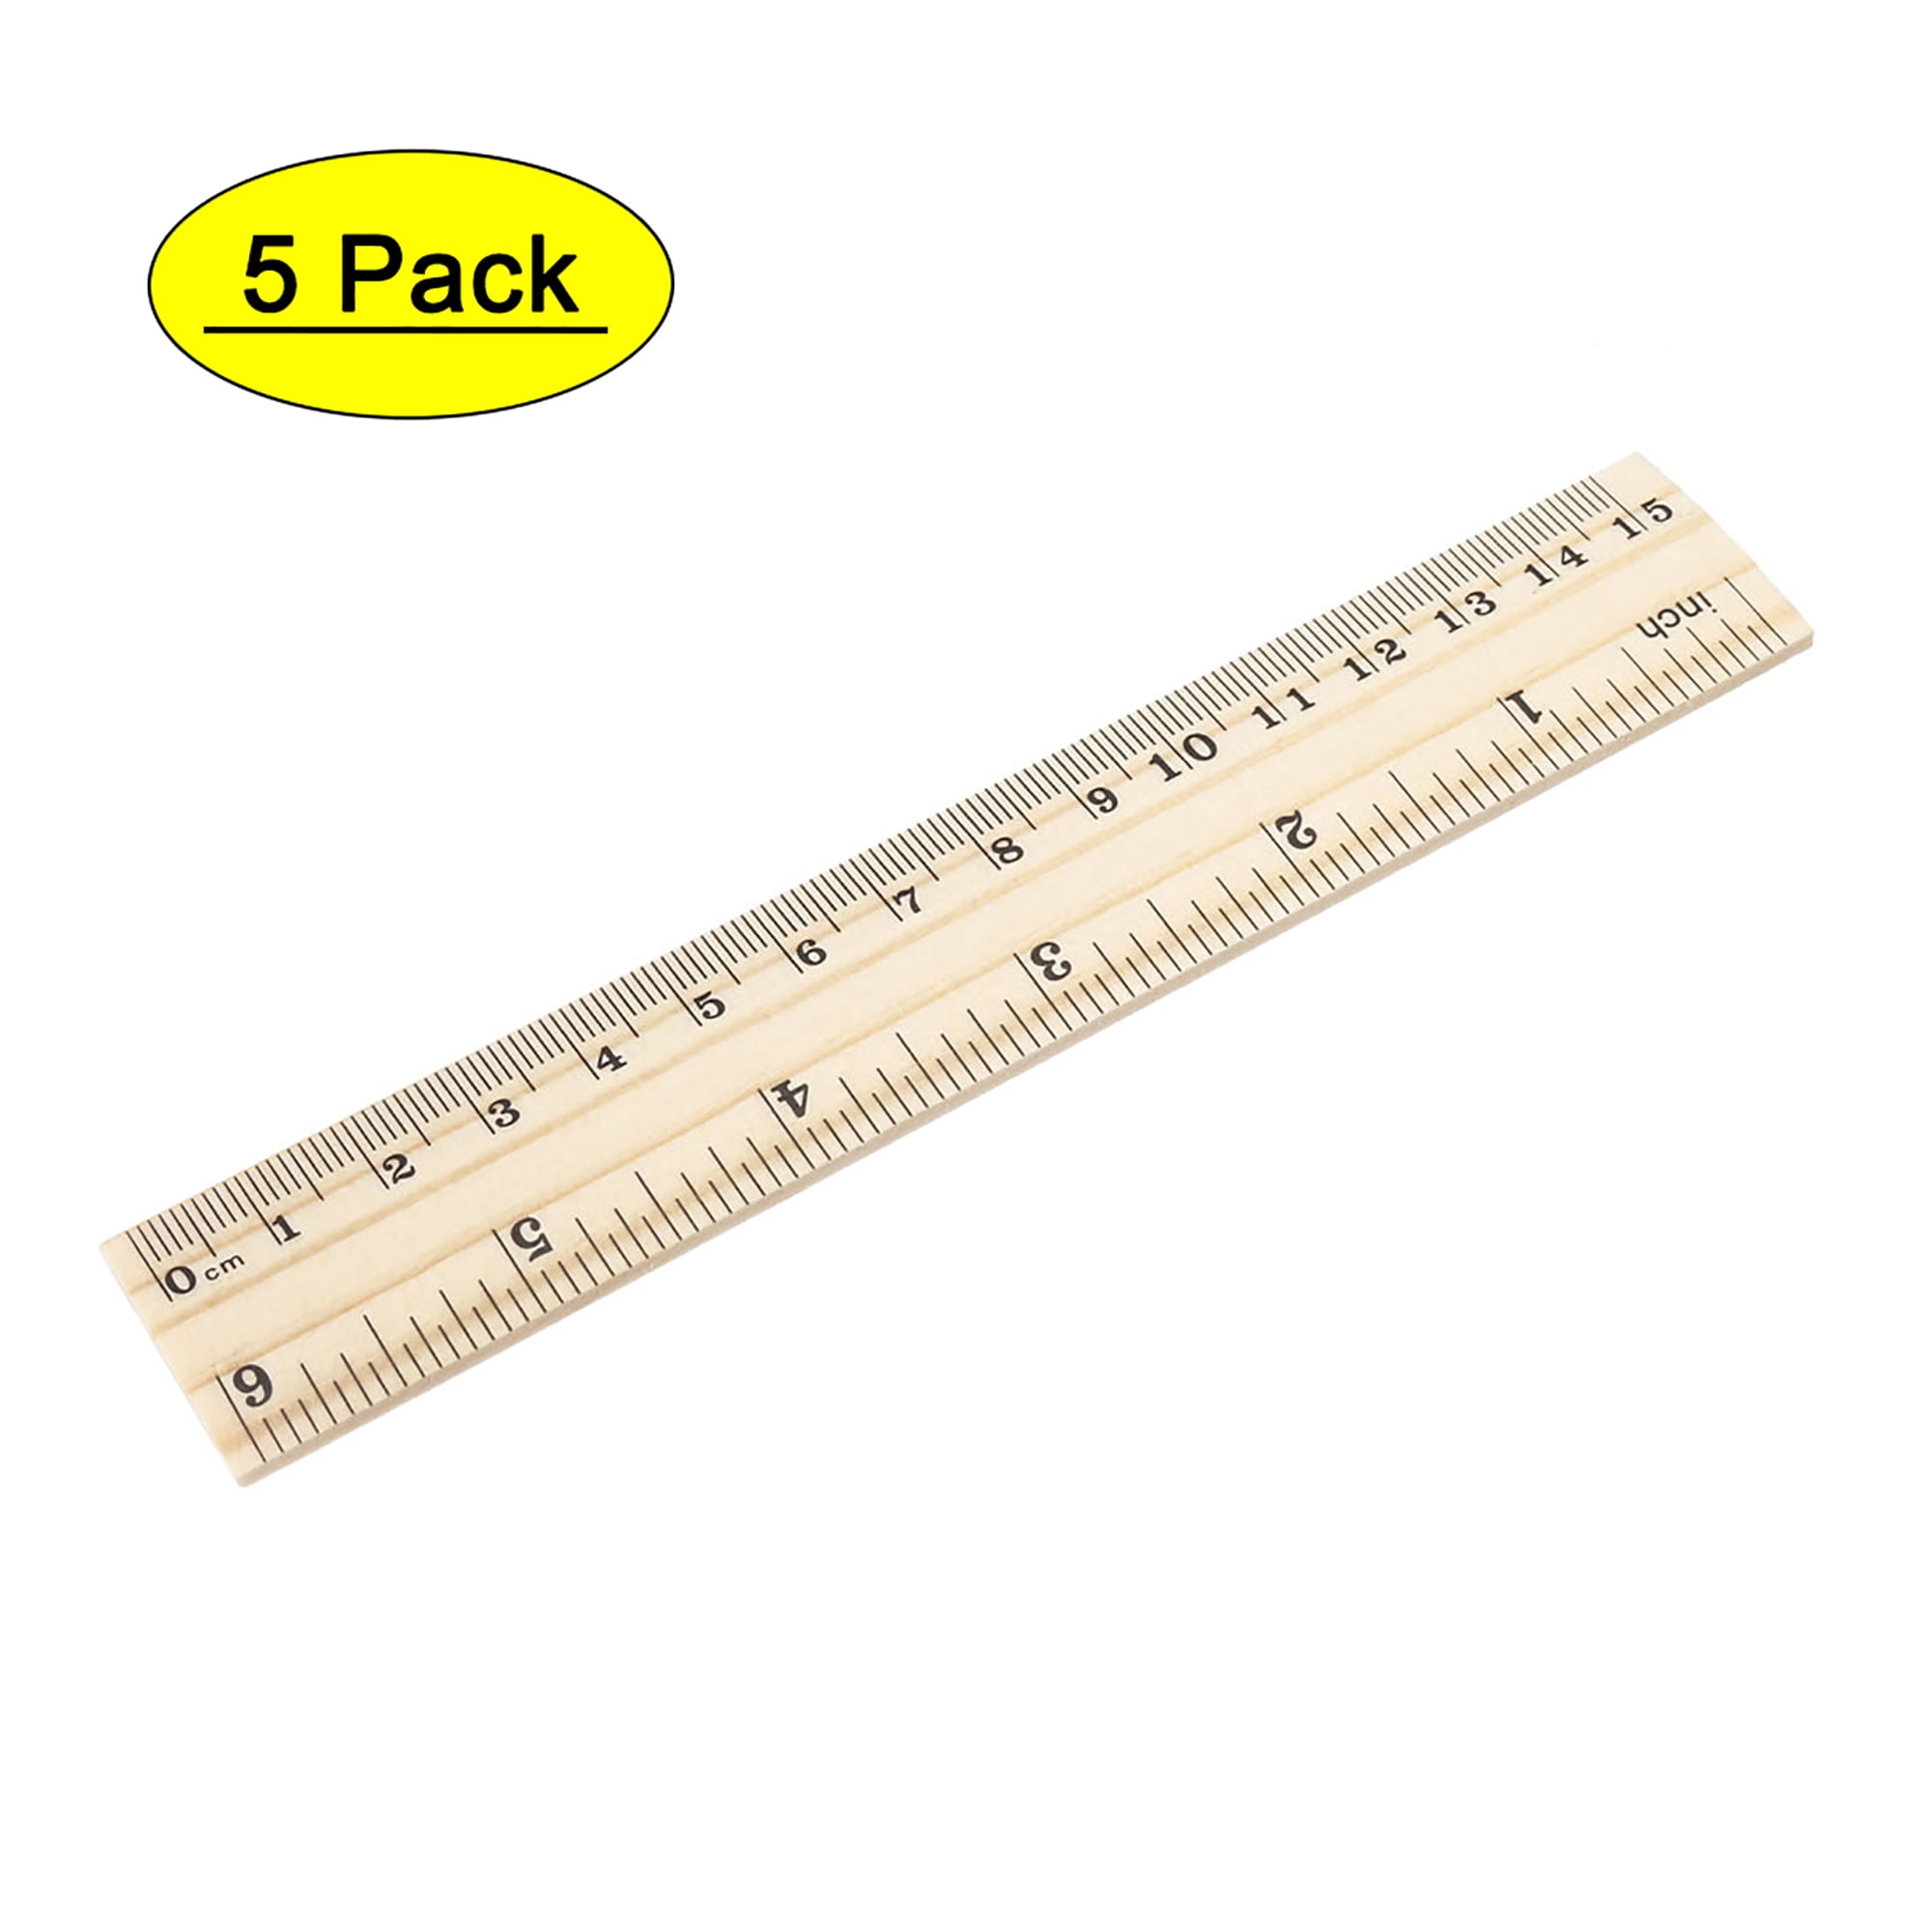 Operitacx 12pcs Wooden Ruler Math Ruler Meter Sticks for Classroom Virtual  Ruler Actual Ruler Woodworking Ruler Precision Ruler Woodworking Wood